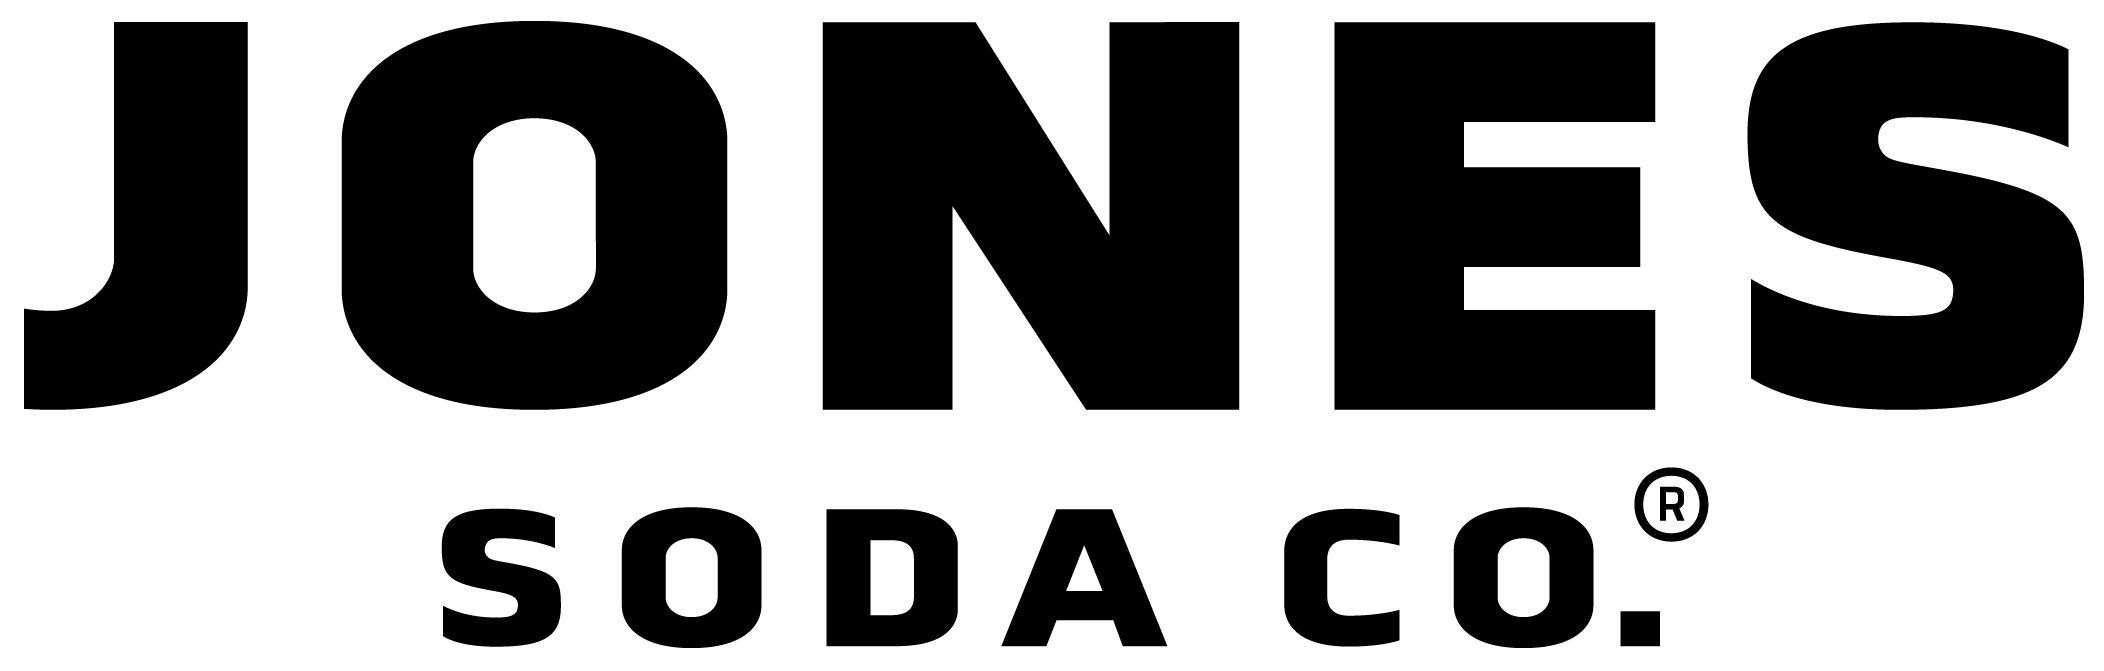 Jones Soda Logo - Jones Soda Co. Launches Natural Jones Soda in California